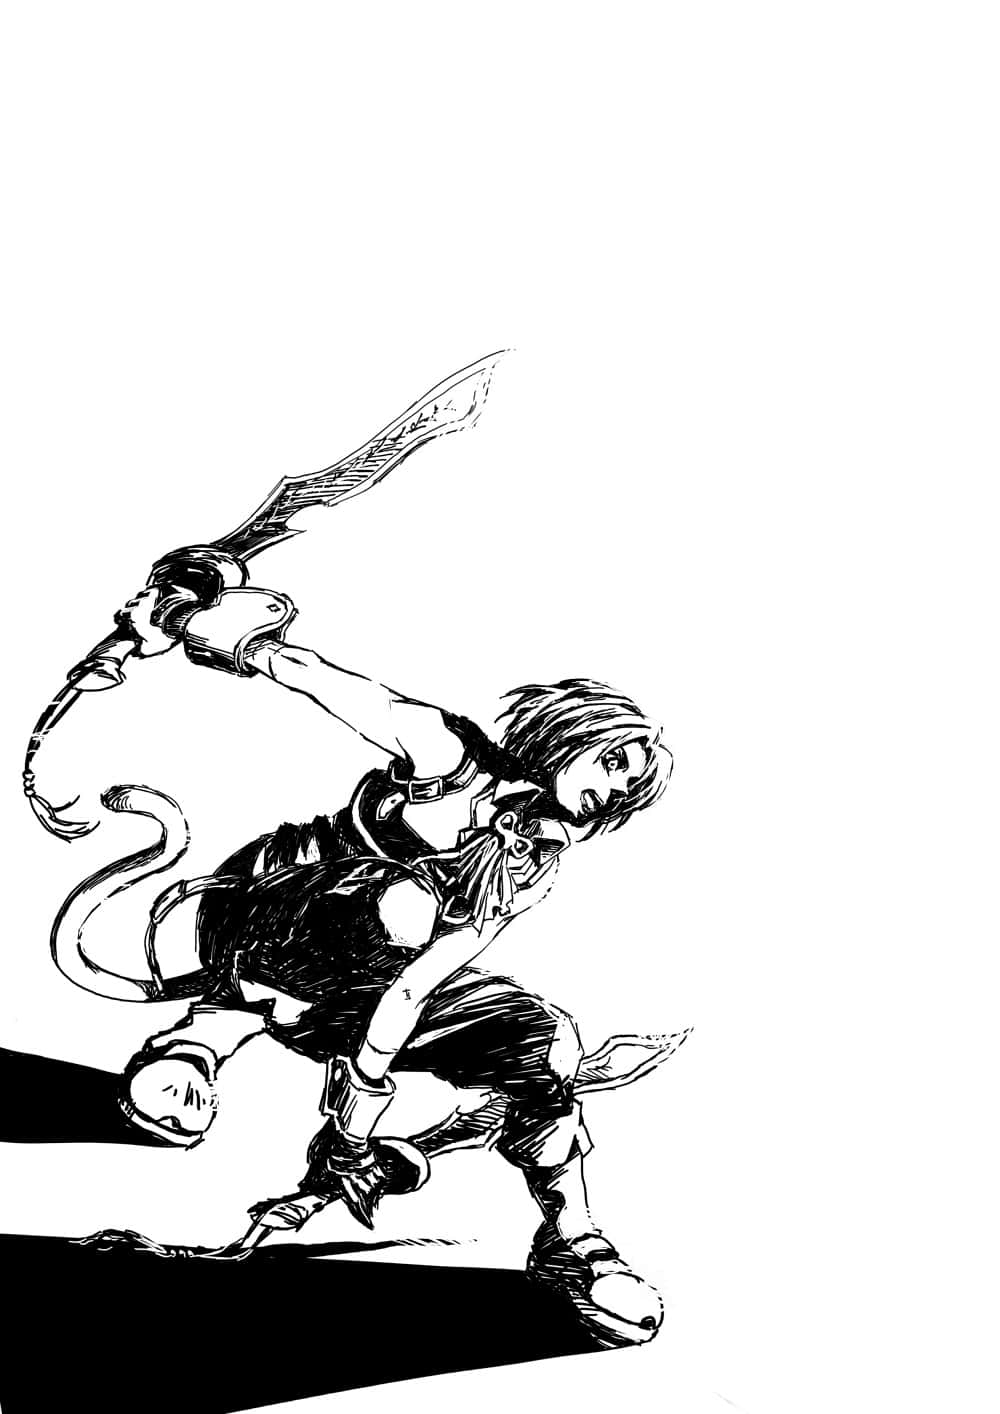 Final Fantasy's Dynamic Character, Zidane Tribal Wallpaper